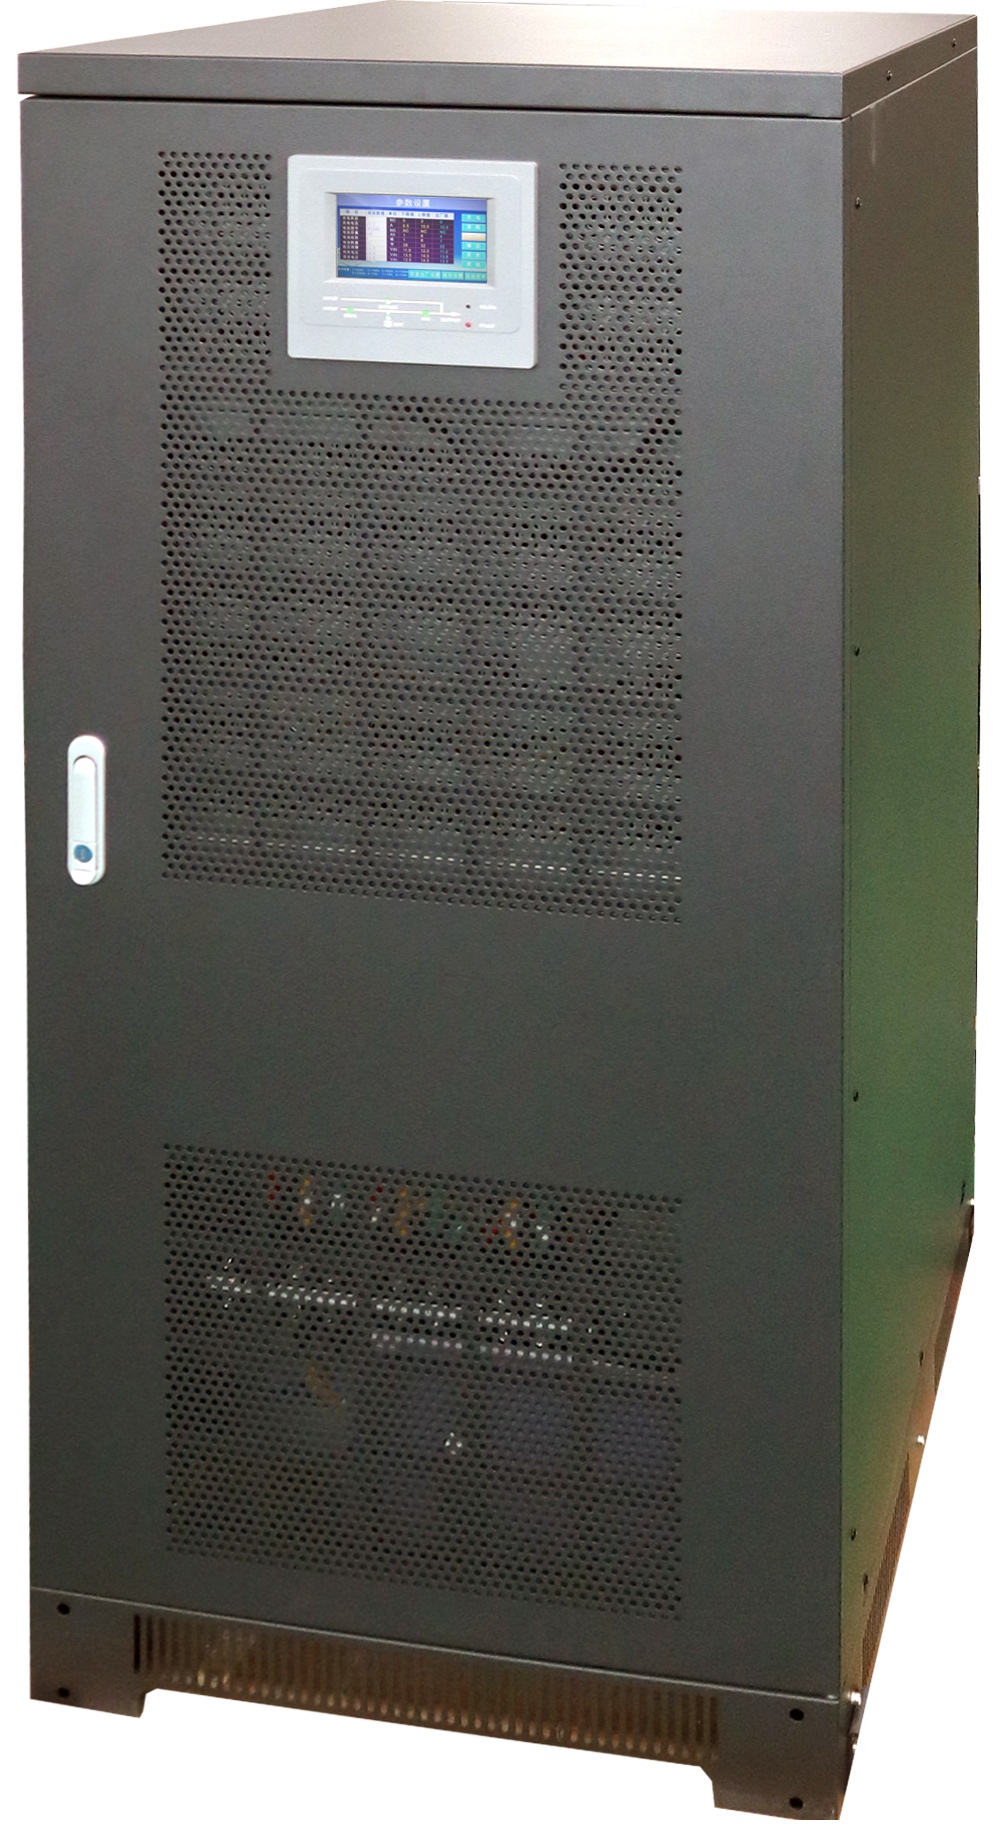 FC Series 60KVA LF Online Transformer Based 3/3 Phase UPS